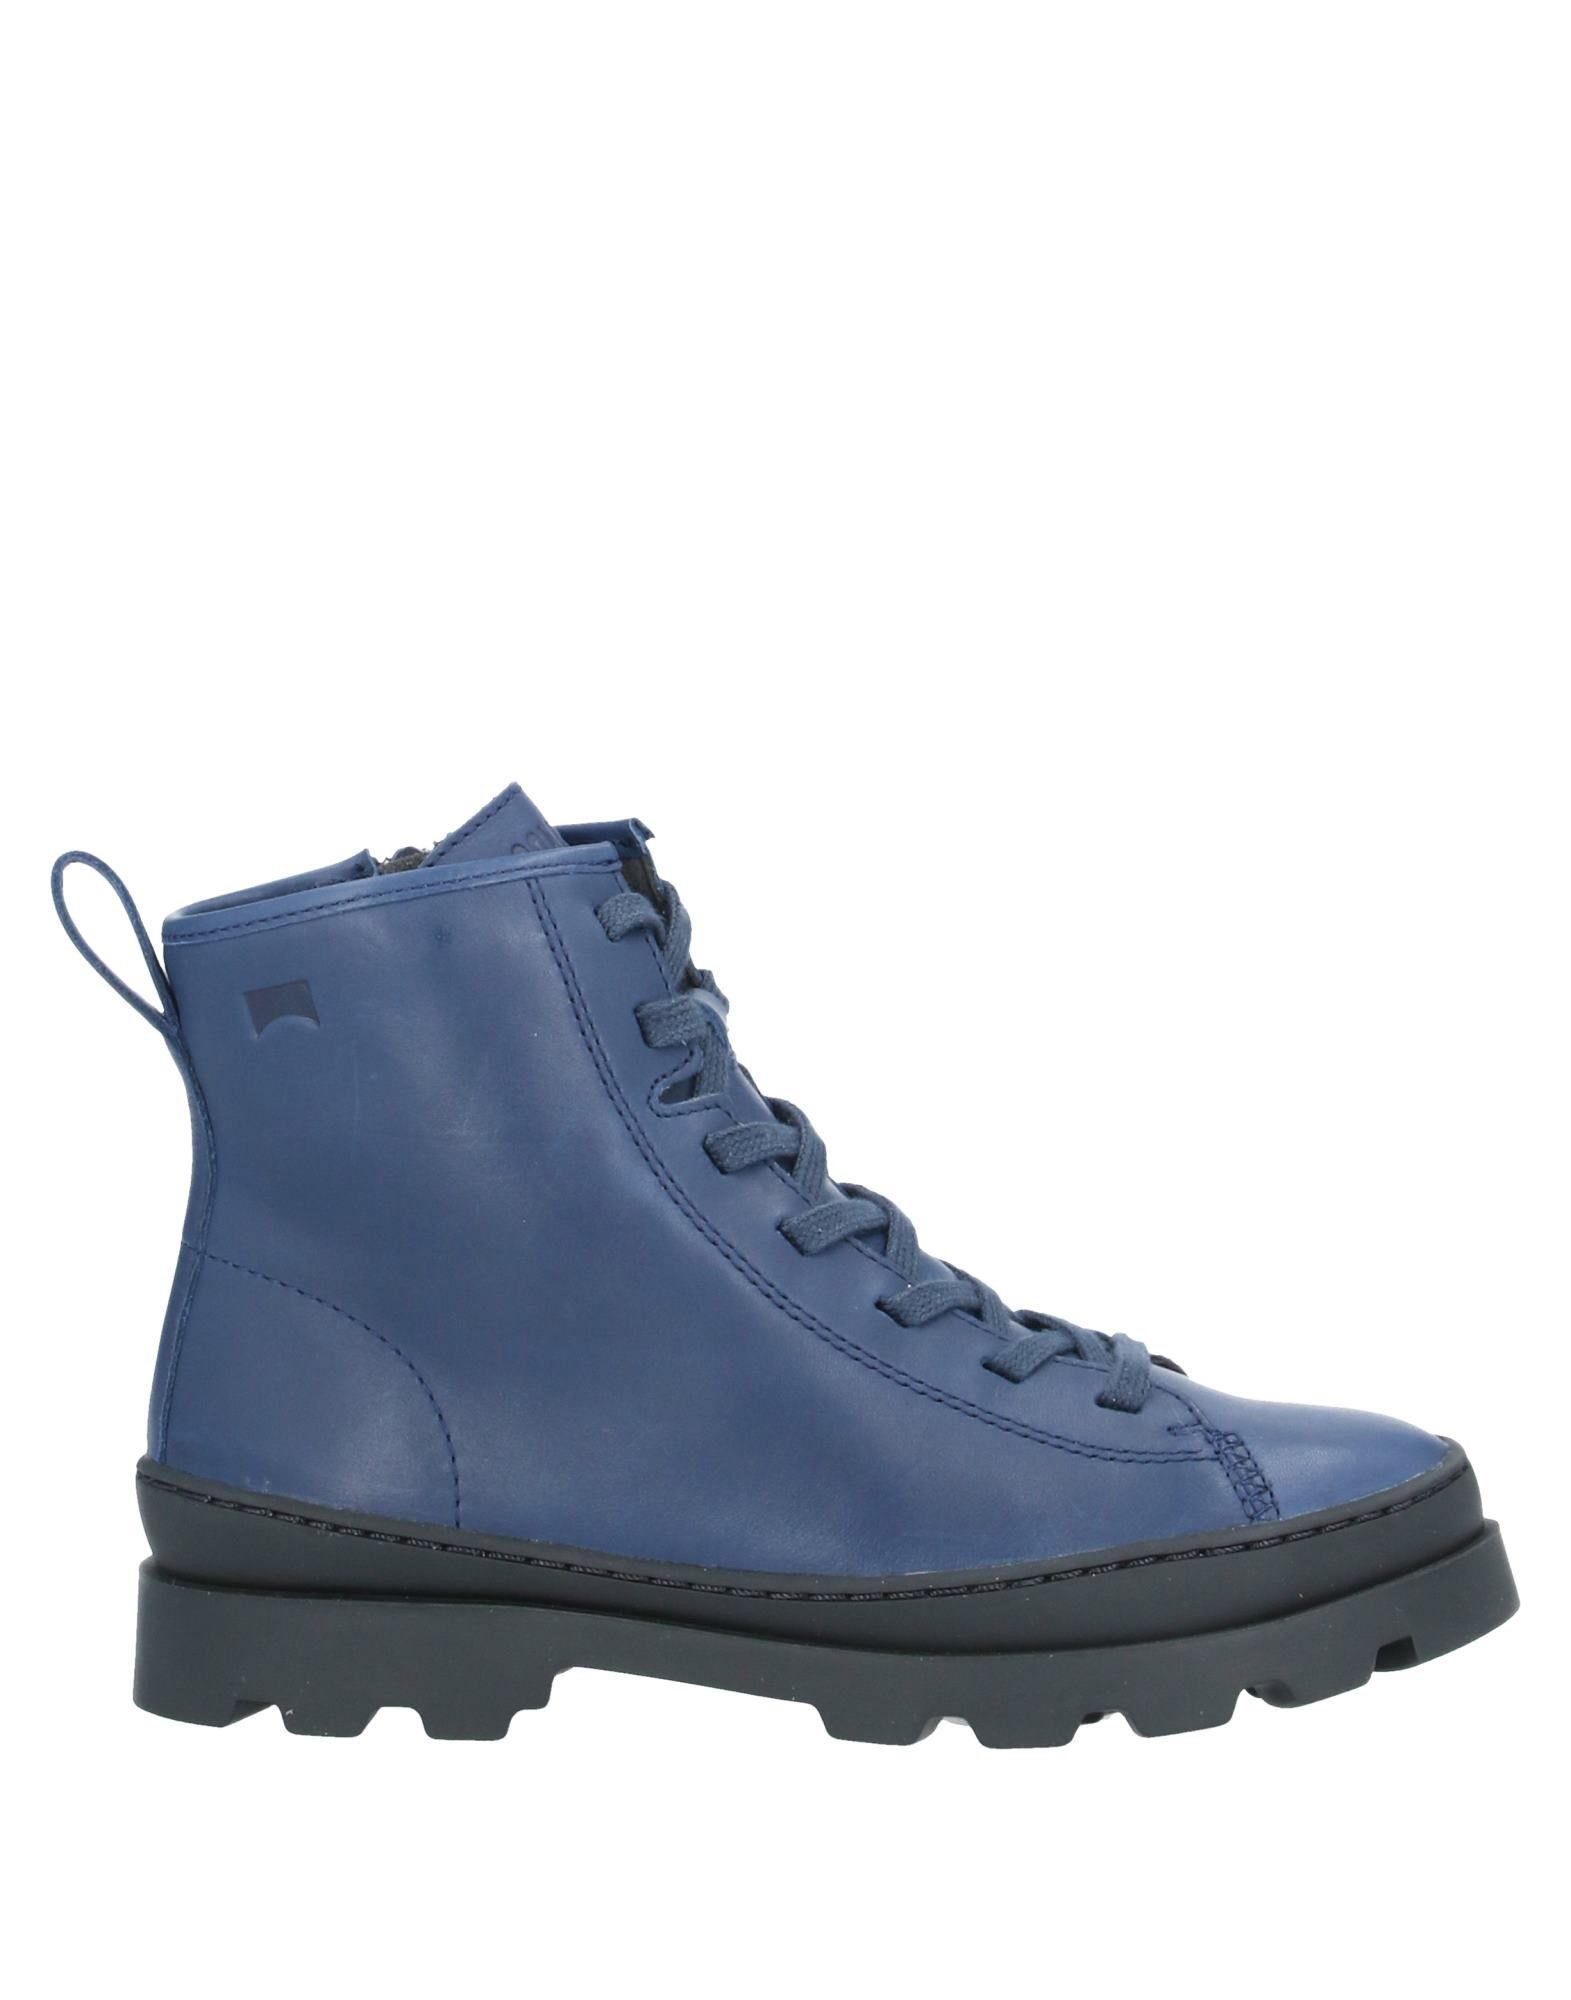 Shop Camper Toddler Boy Ankle Boots Blue Size 10c Soft Leather